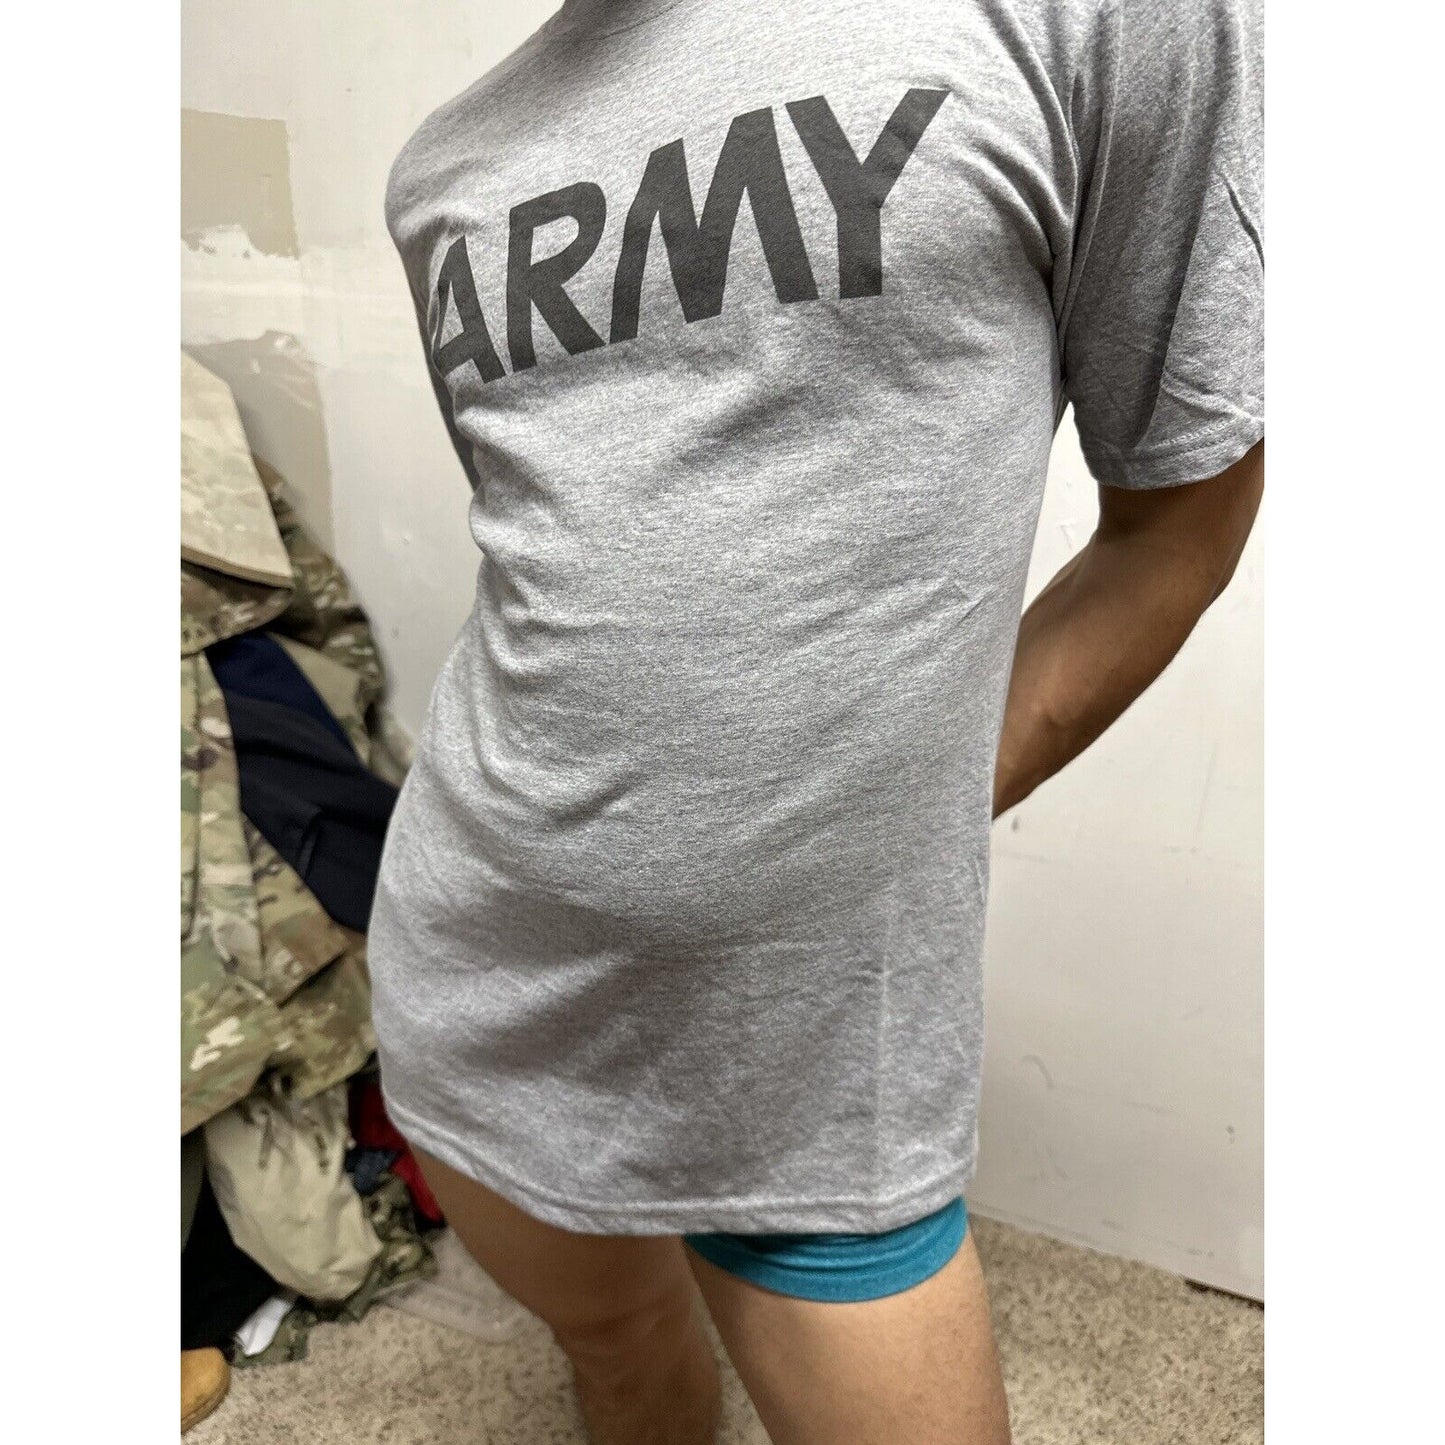 Men’s Soffe Small Dri Release Gray Army Pt Uniform Short Short Sleeve